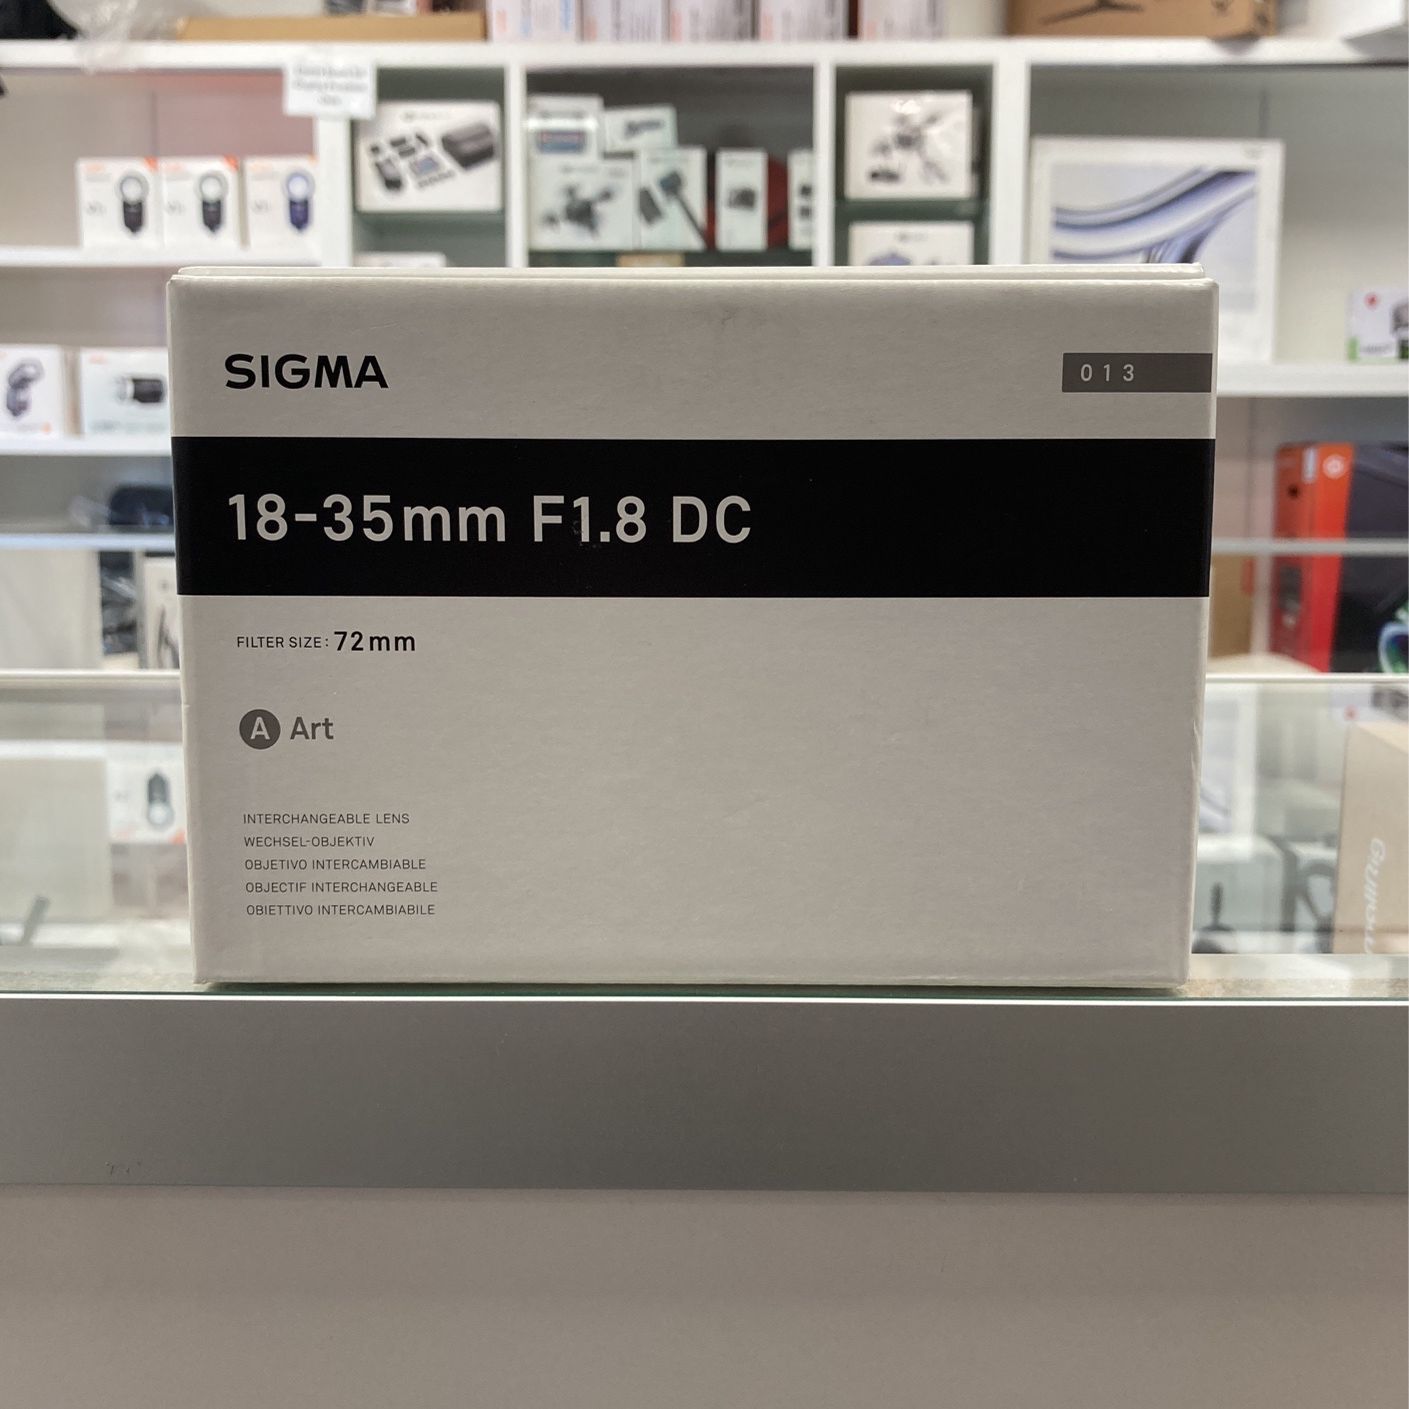 Sigma 18-35mm F1.8 DC Canon EF (Sigma Sale Ends 4/28)